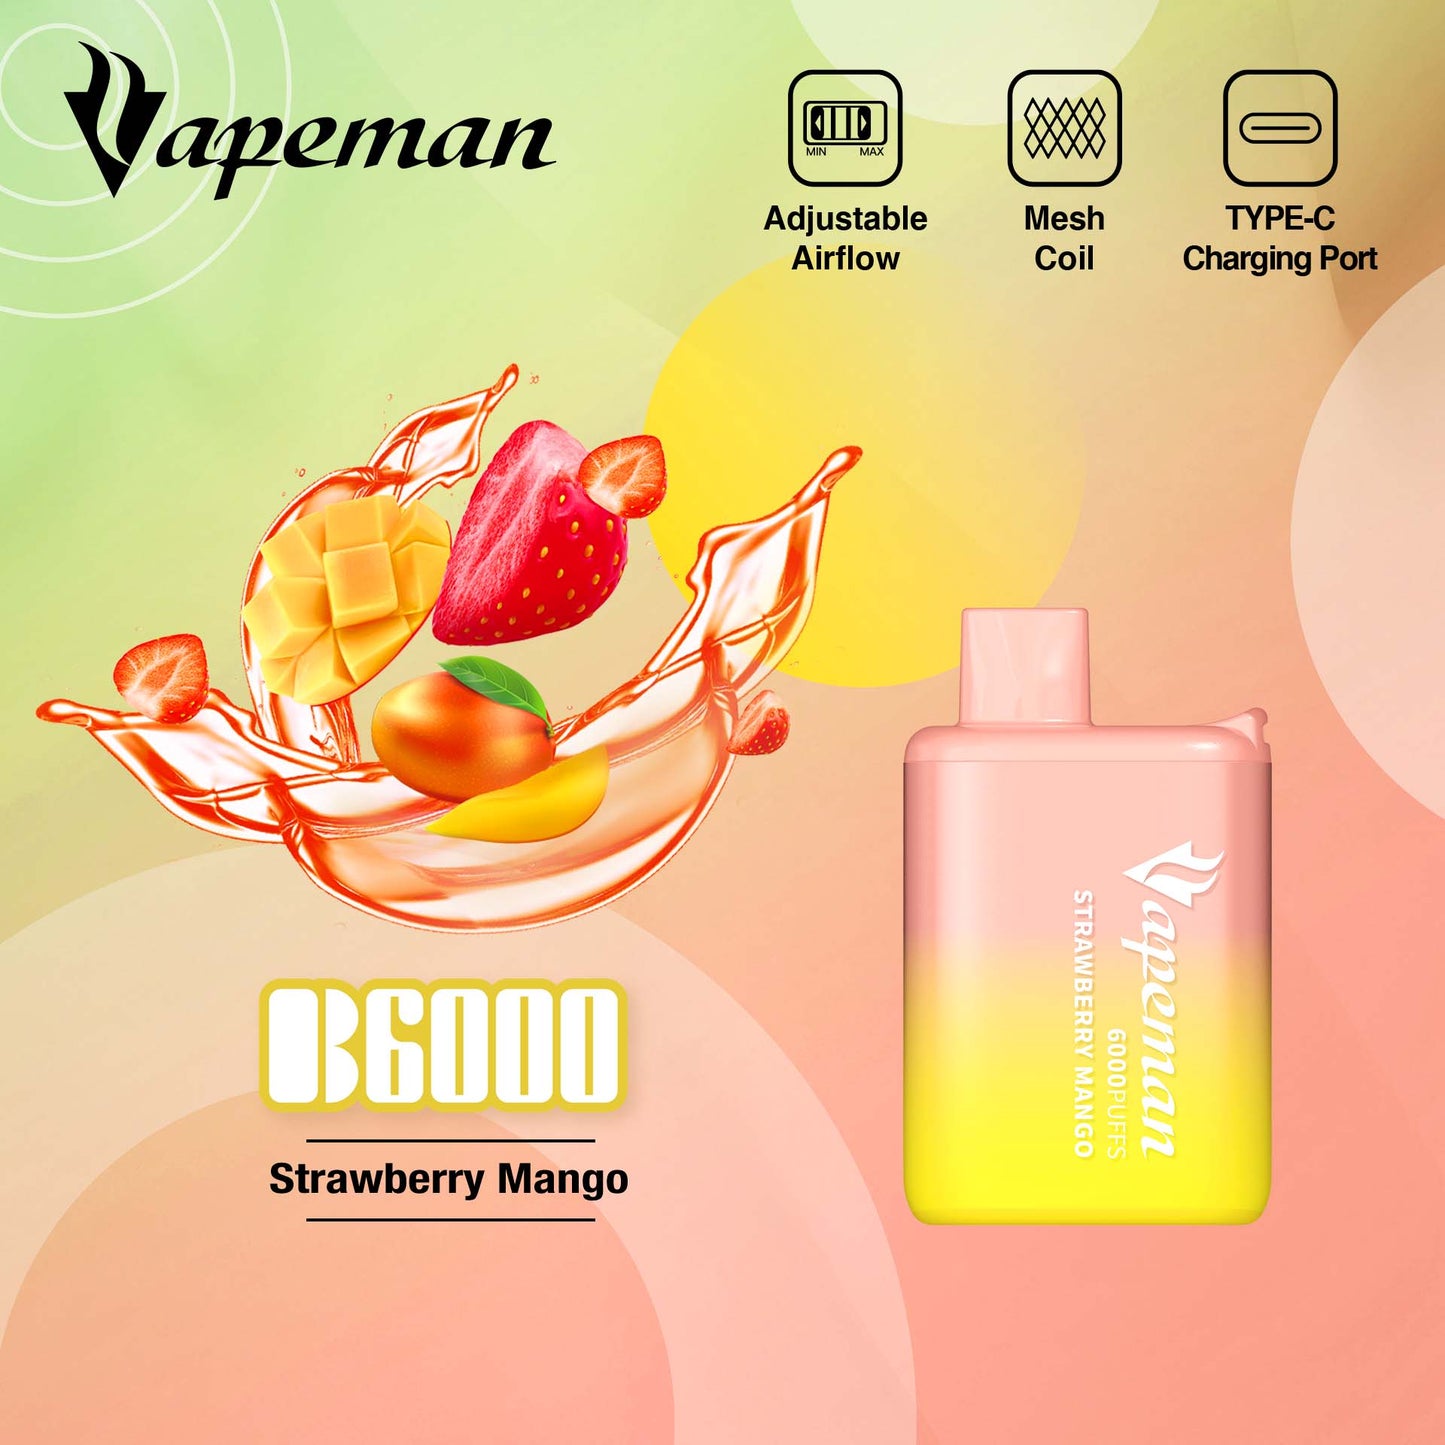 Vapeman - B6000 - Strawberry Mango -  Disposable Vape Device - Salt Nicotine 